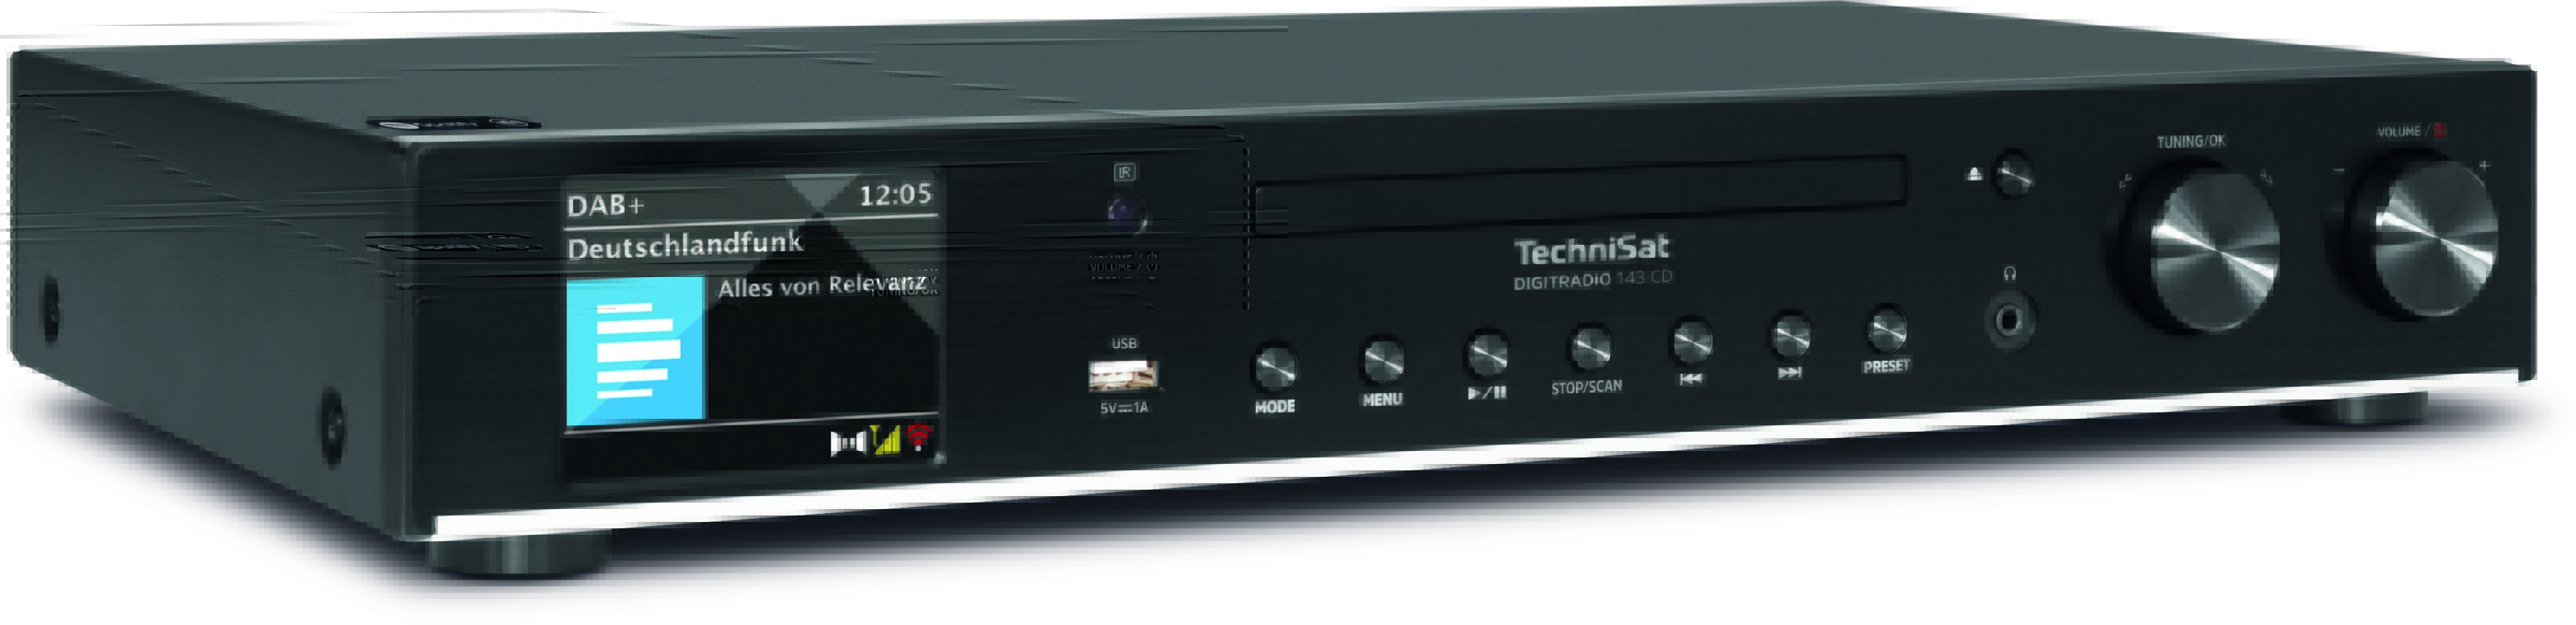 TechniSat DIGITRADIO 143 CD (V3) HiFi-Tuner, Internetradio, DABUKW, Bluetooth